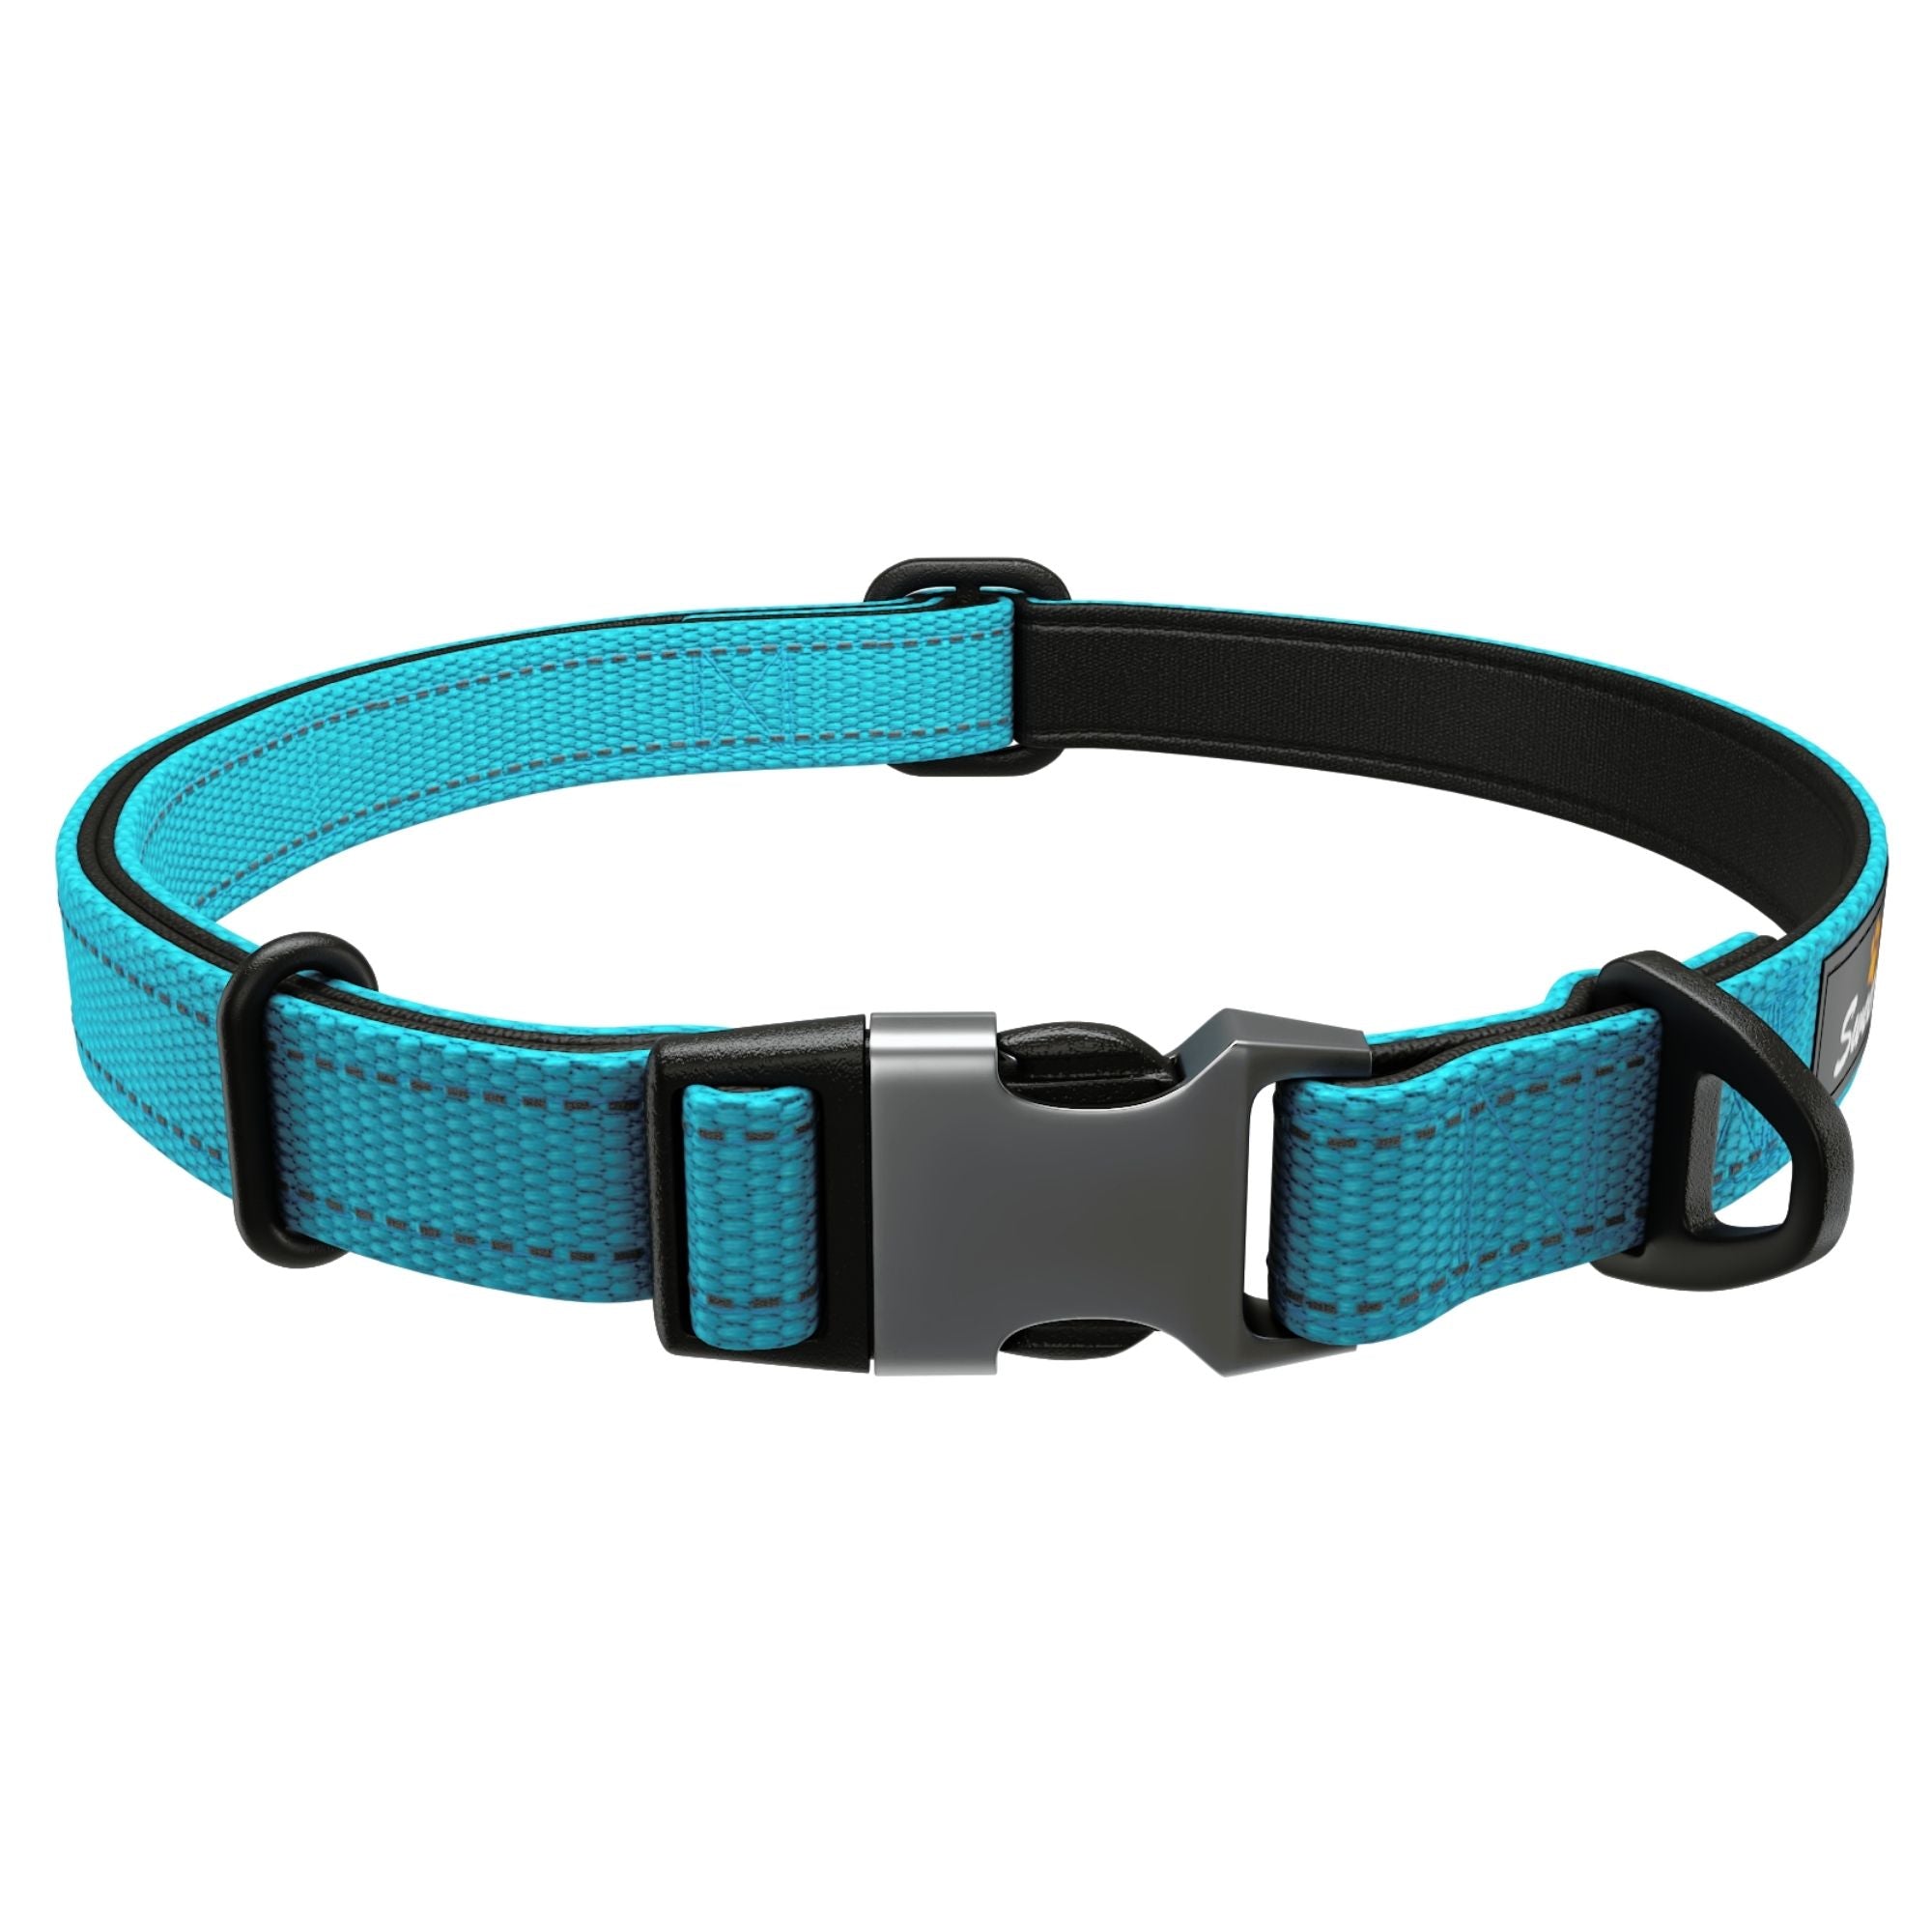 Neoprene Padded Dog Collar - Blue - Sweetie